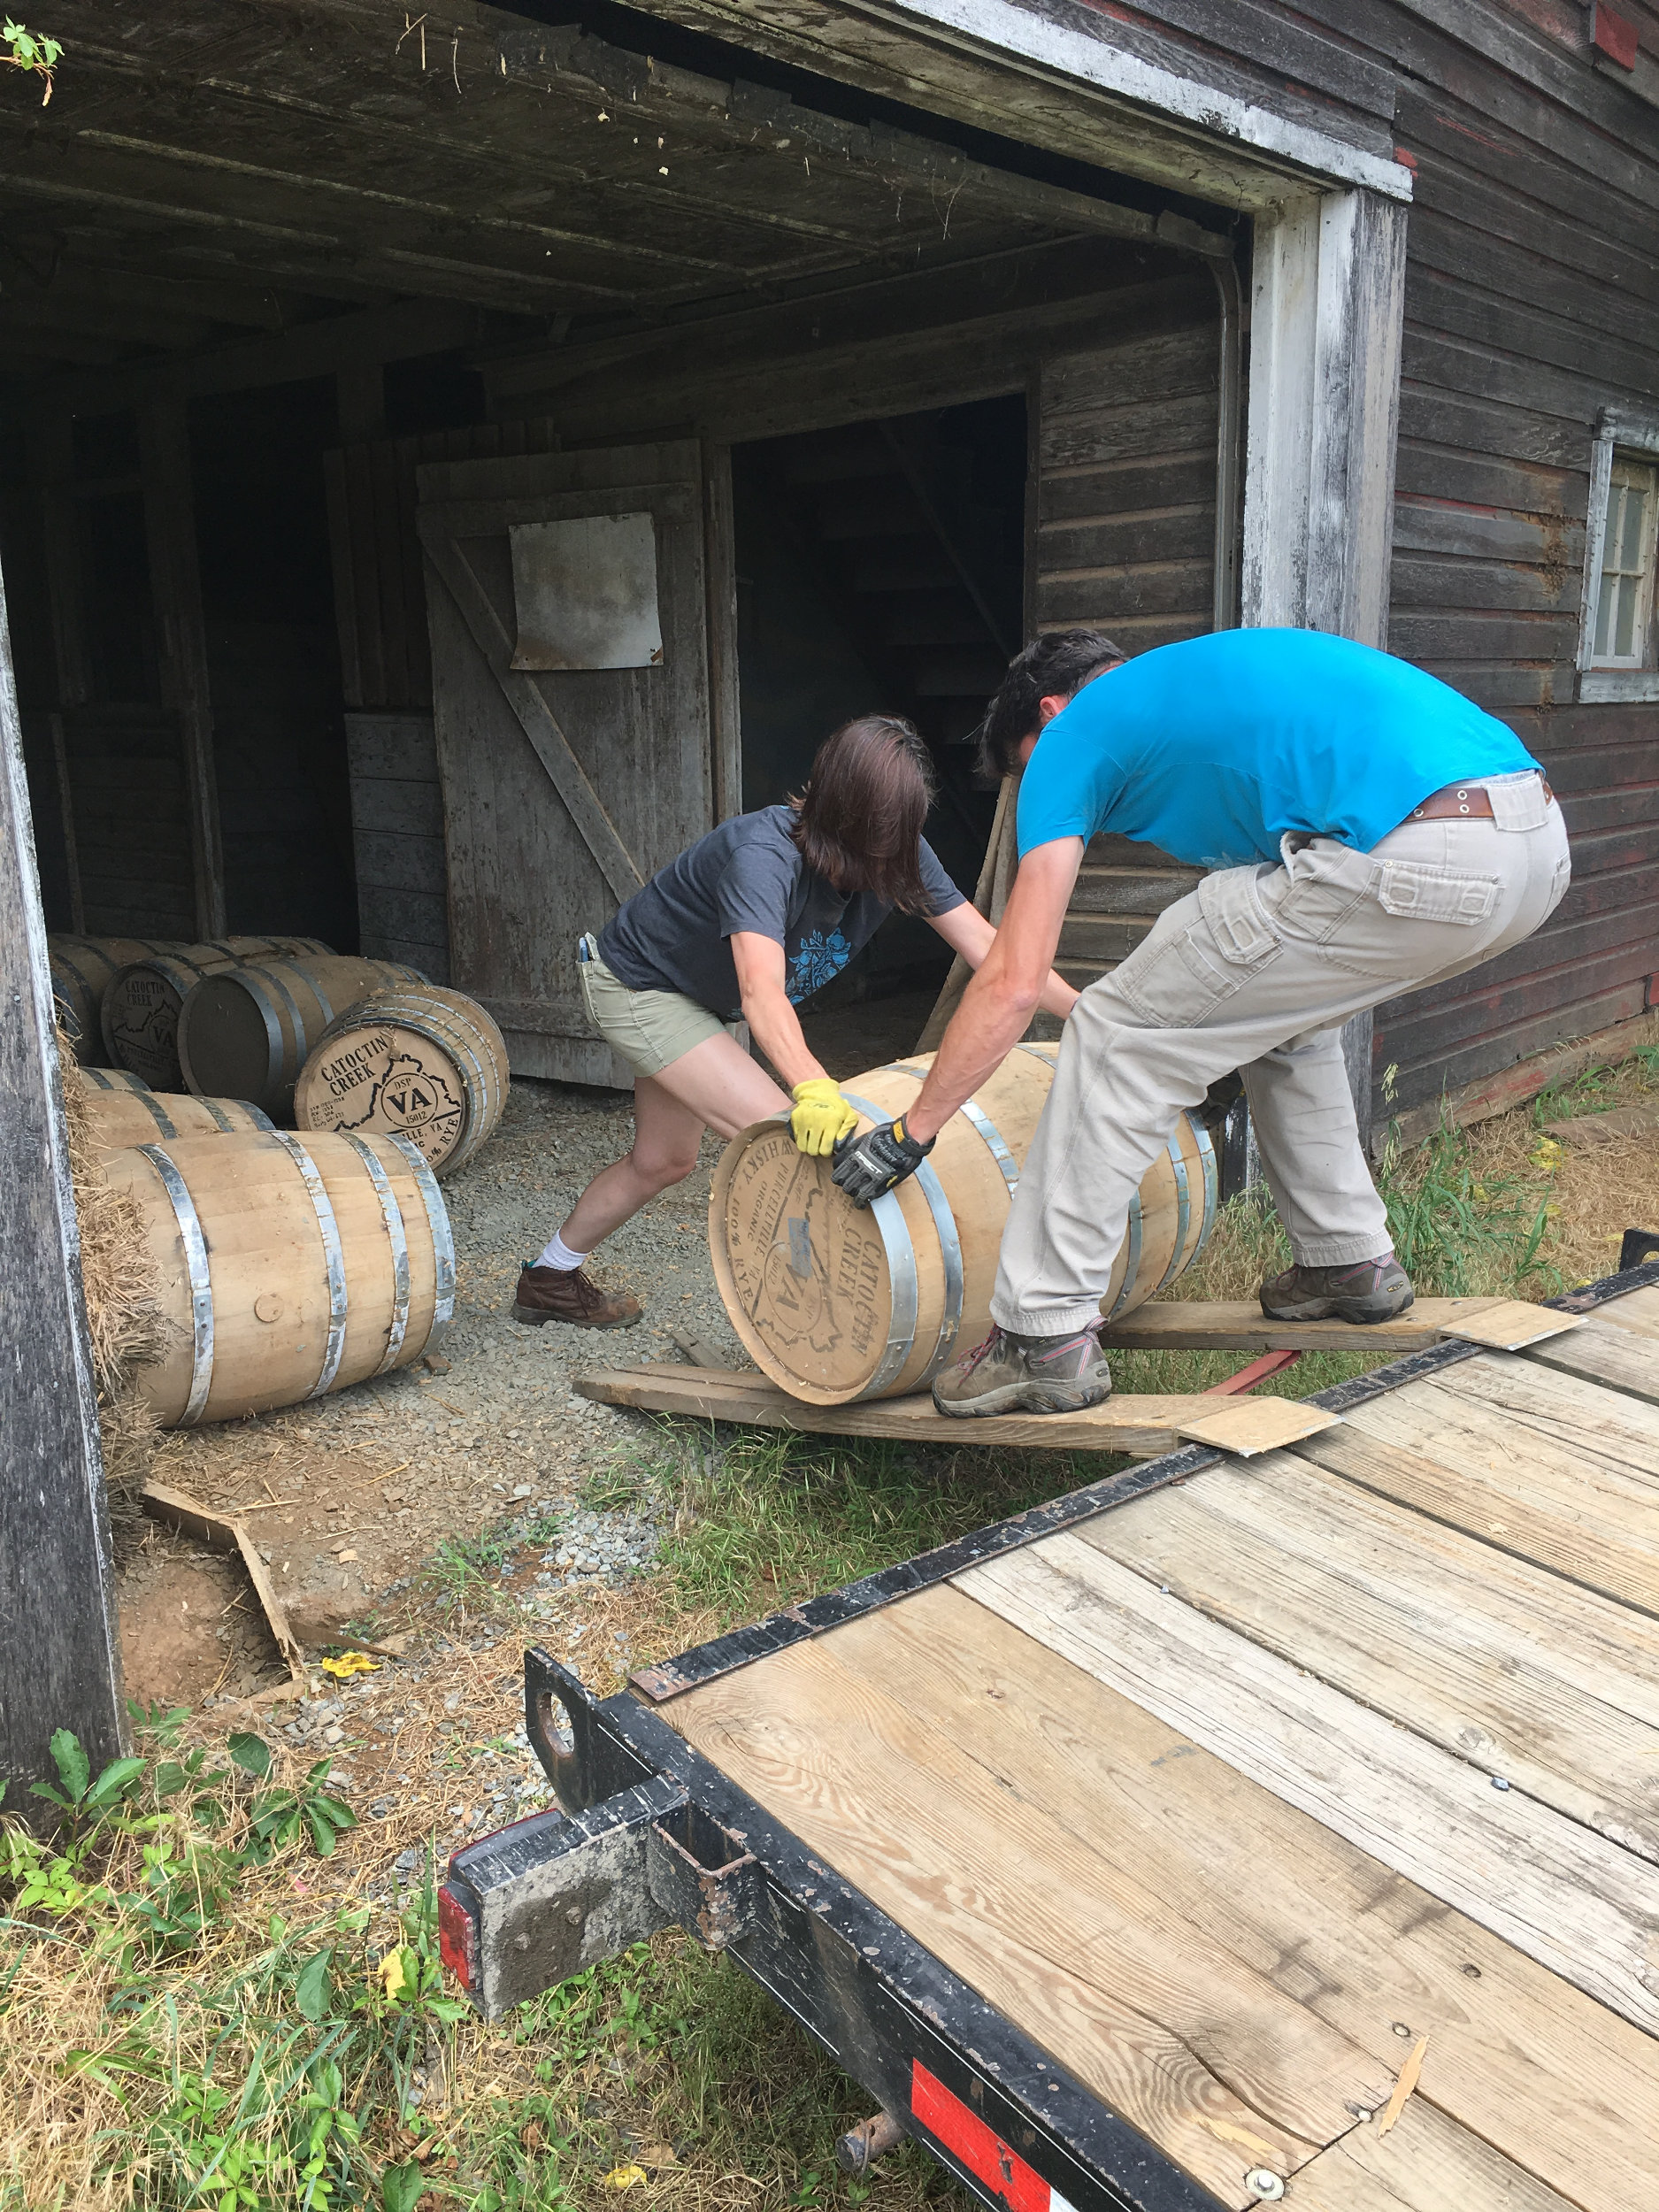 Loading Catoctin Creek barrels into the barn, circa 2017.